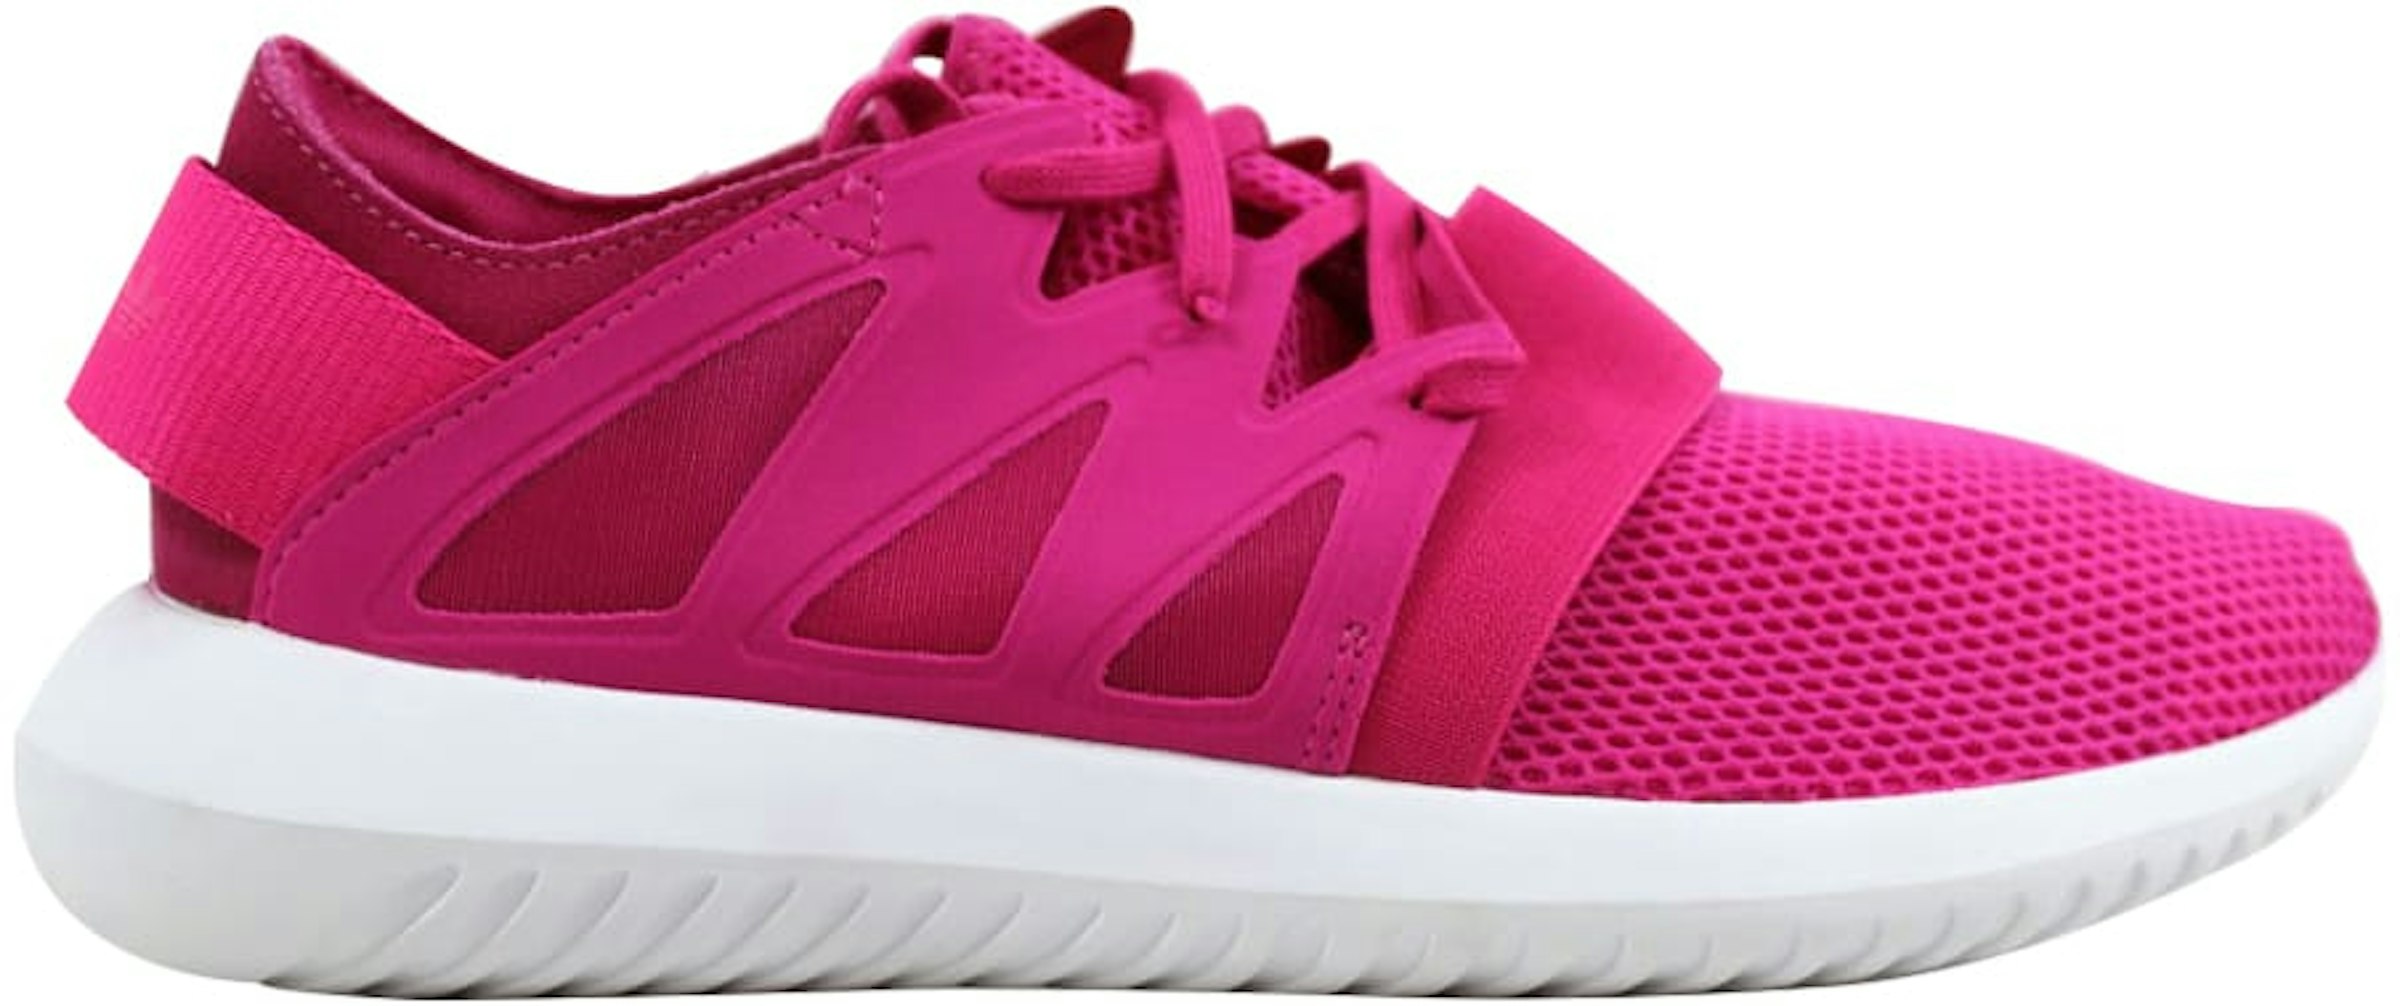 adidas Viral Pink (Women's) - AQ6302 - US